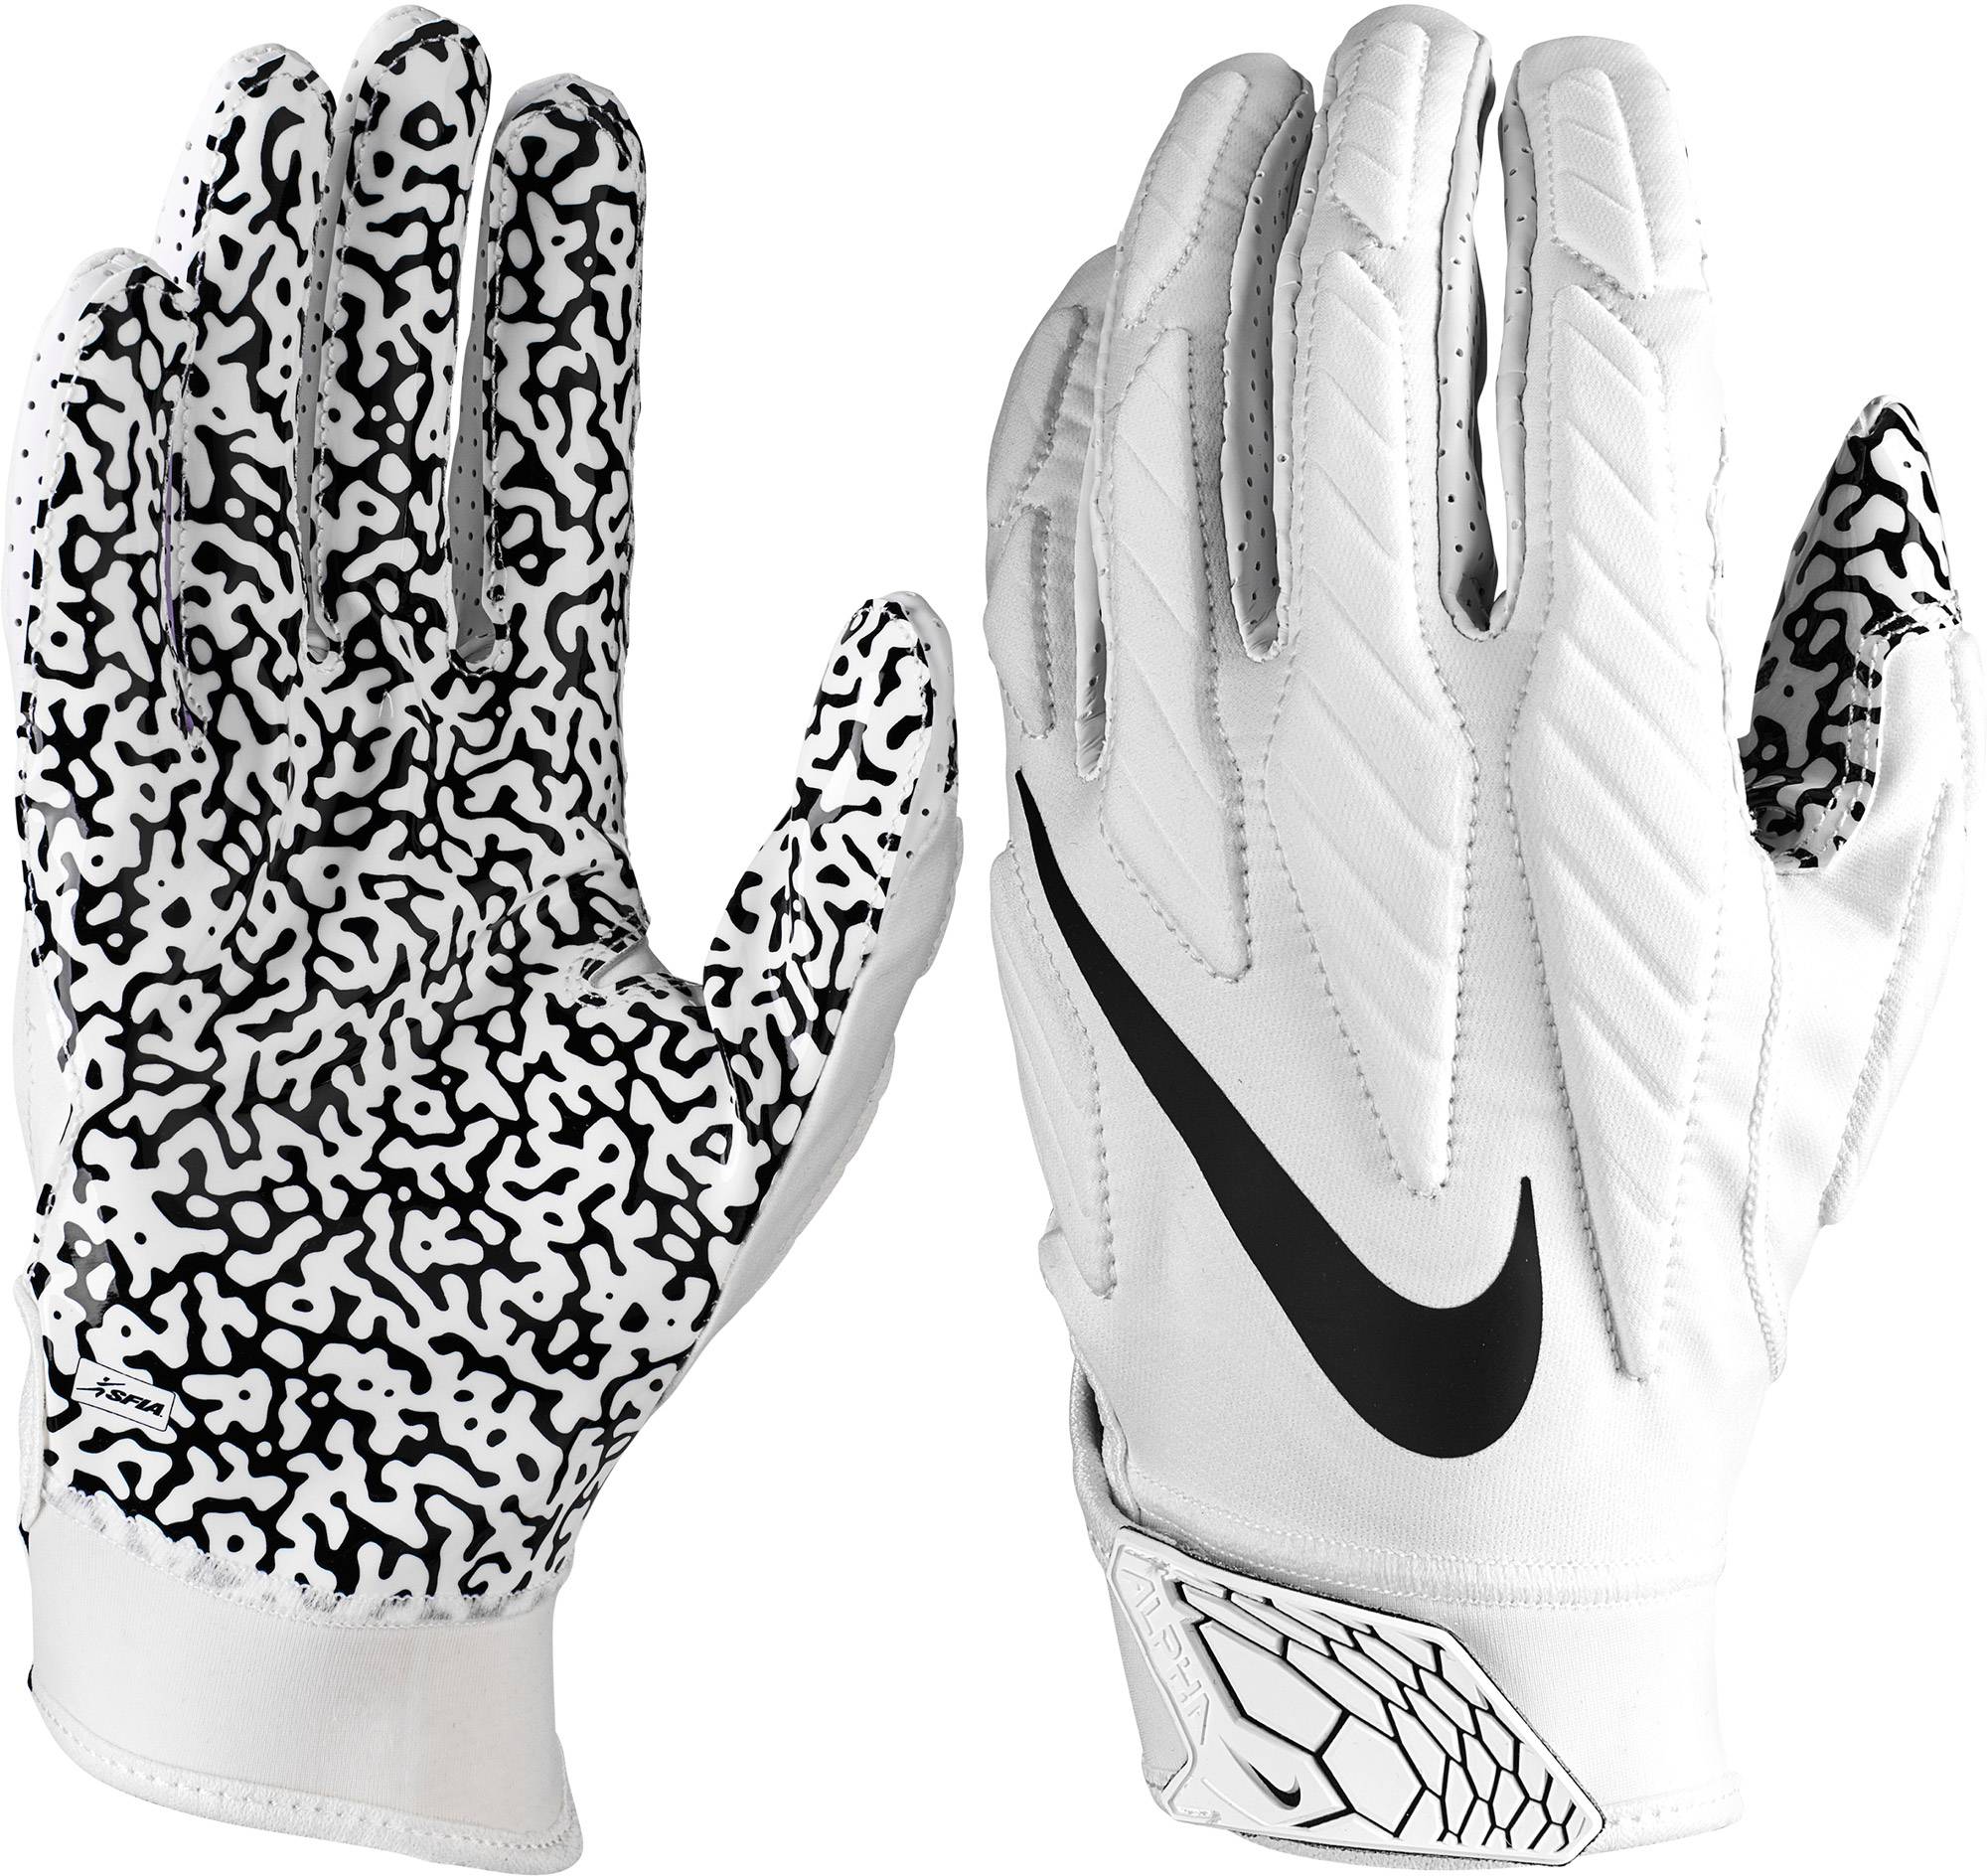 superbad football gloves